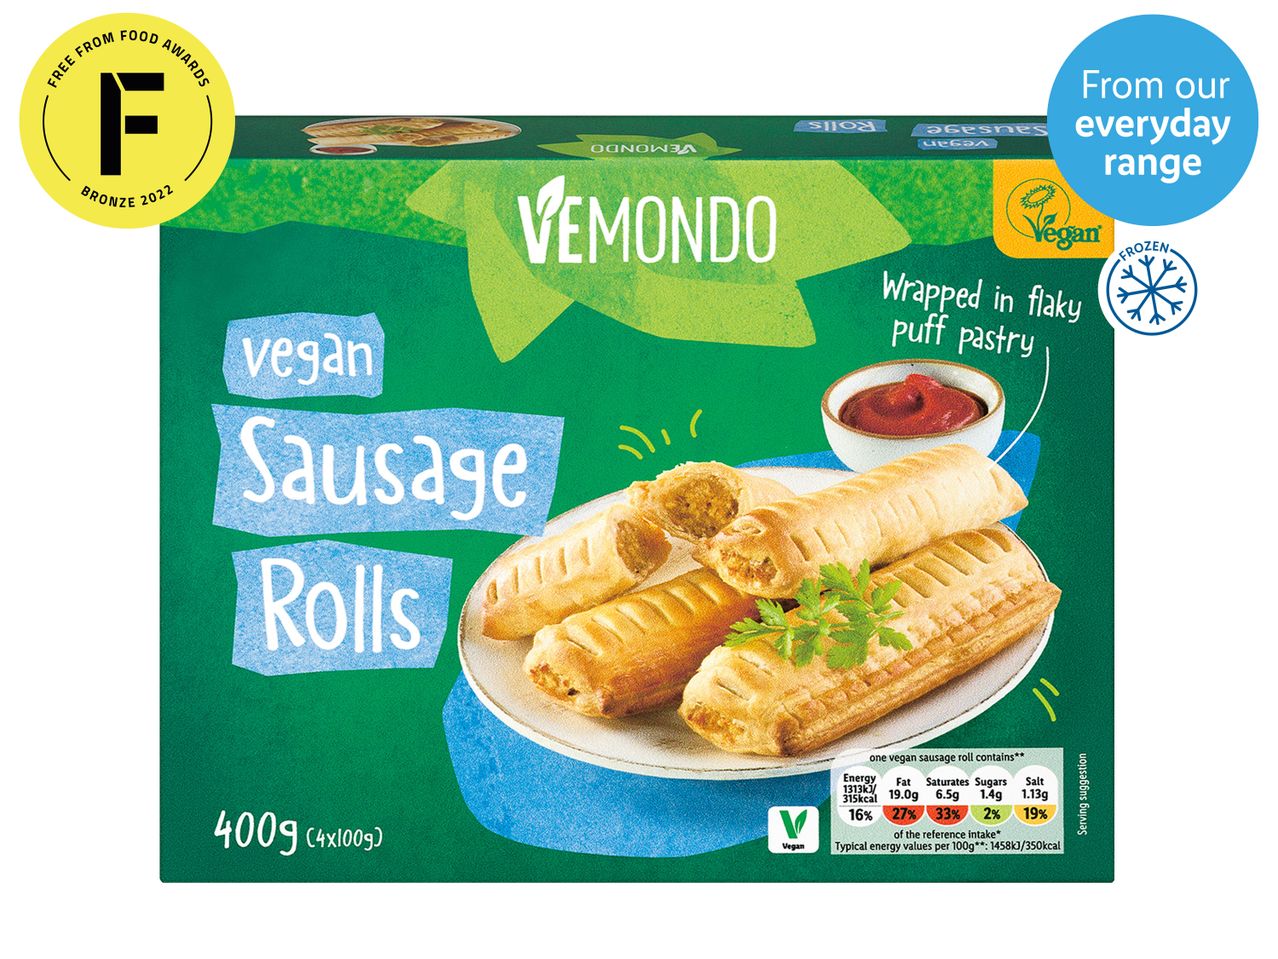 Go to full screen view: Vemondo Vegan Sausage Rolls - Image 1